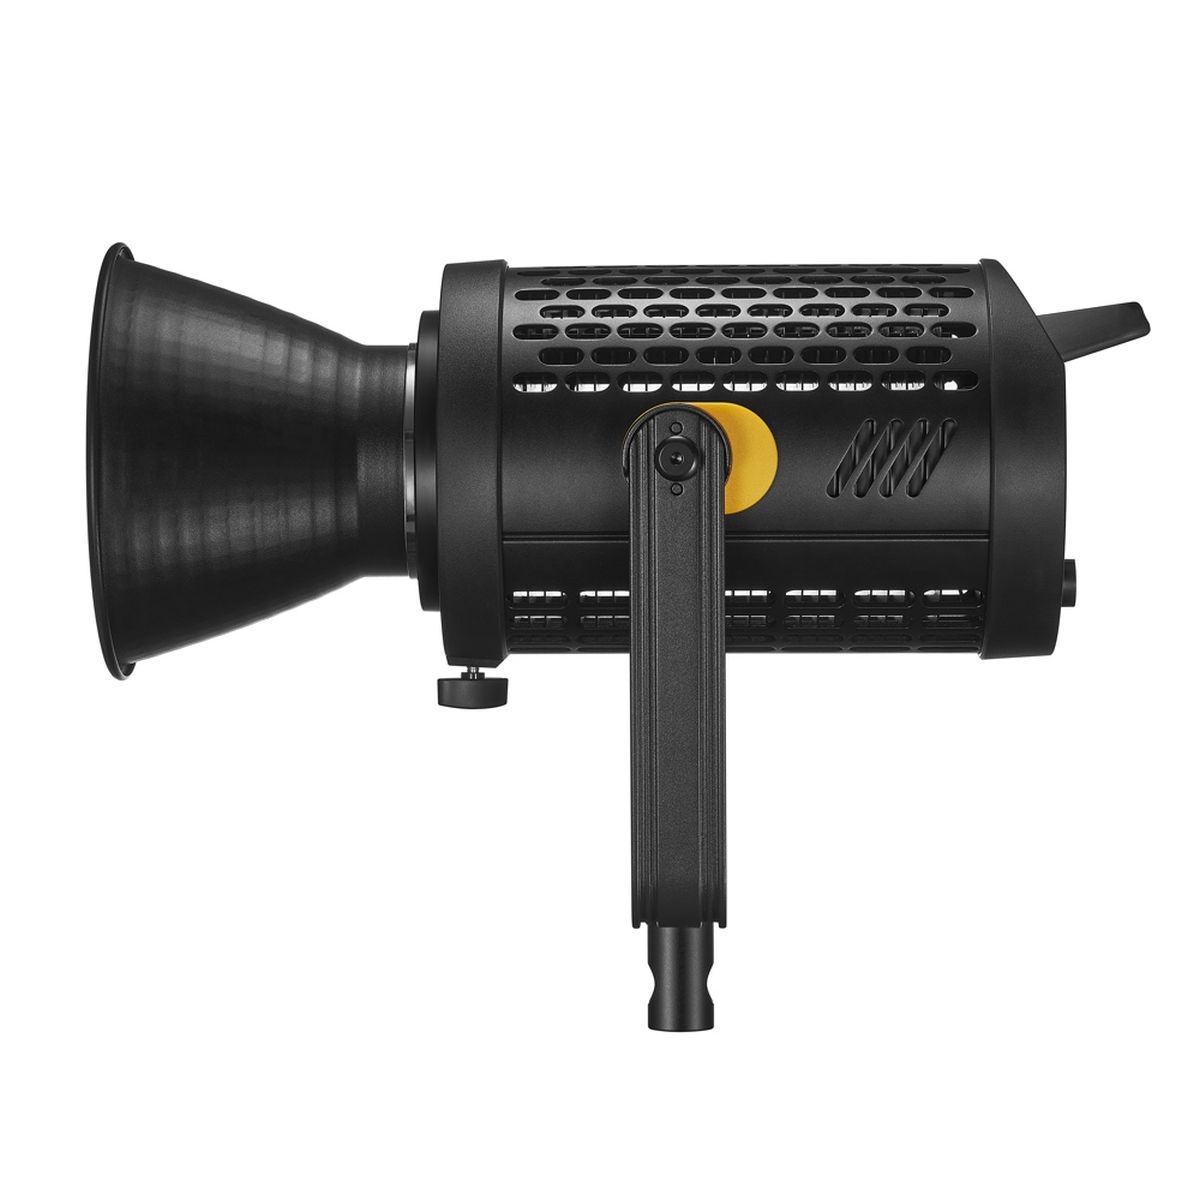 Godox LED UL150ll geräuschlose Videoleuchte